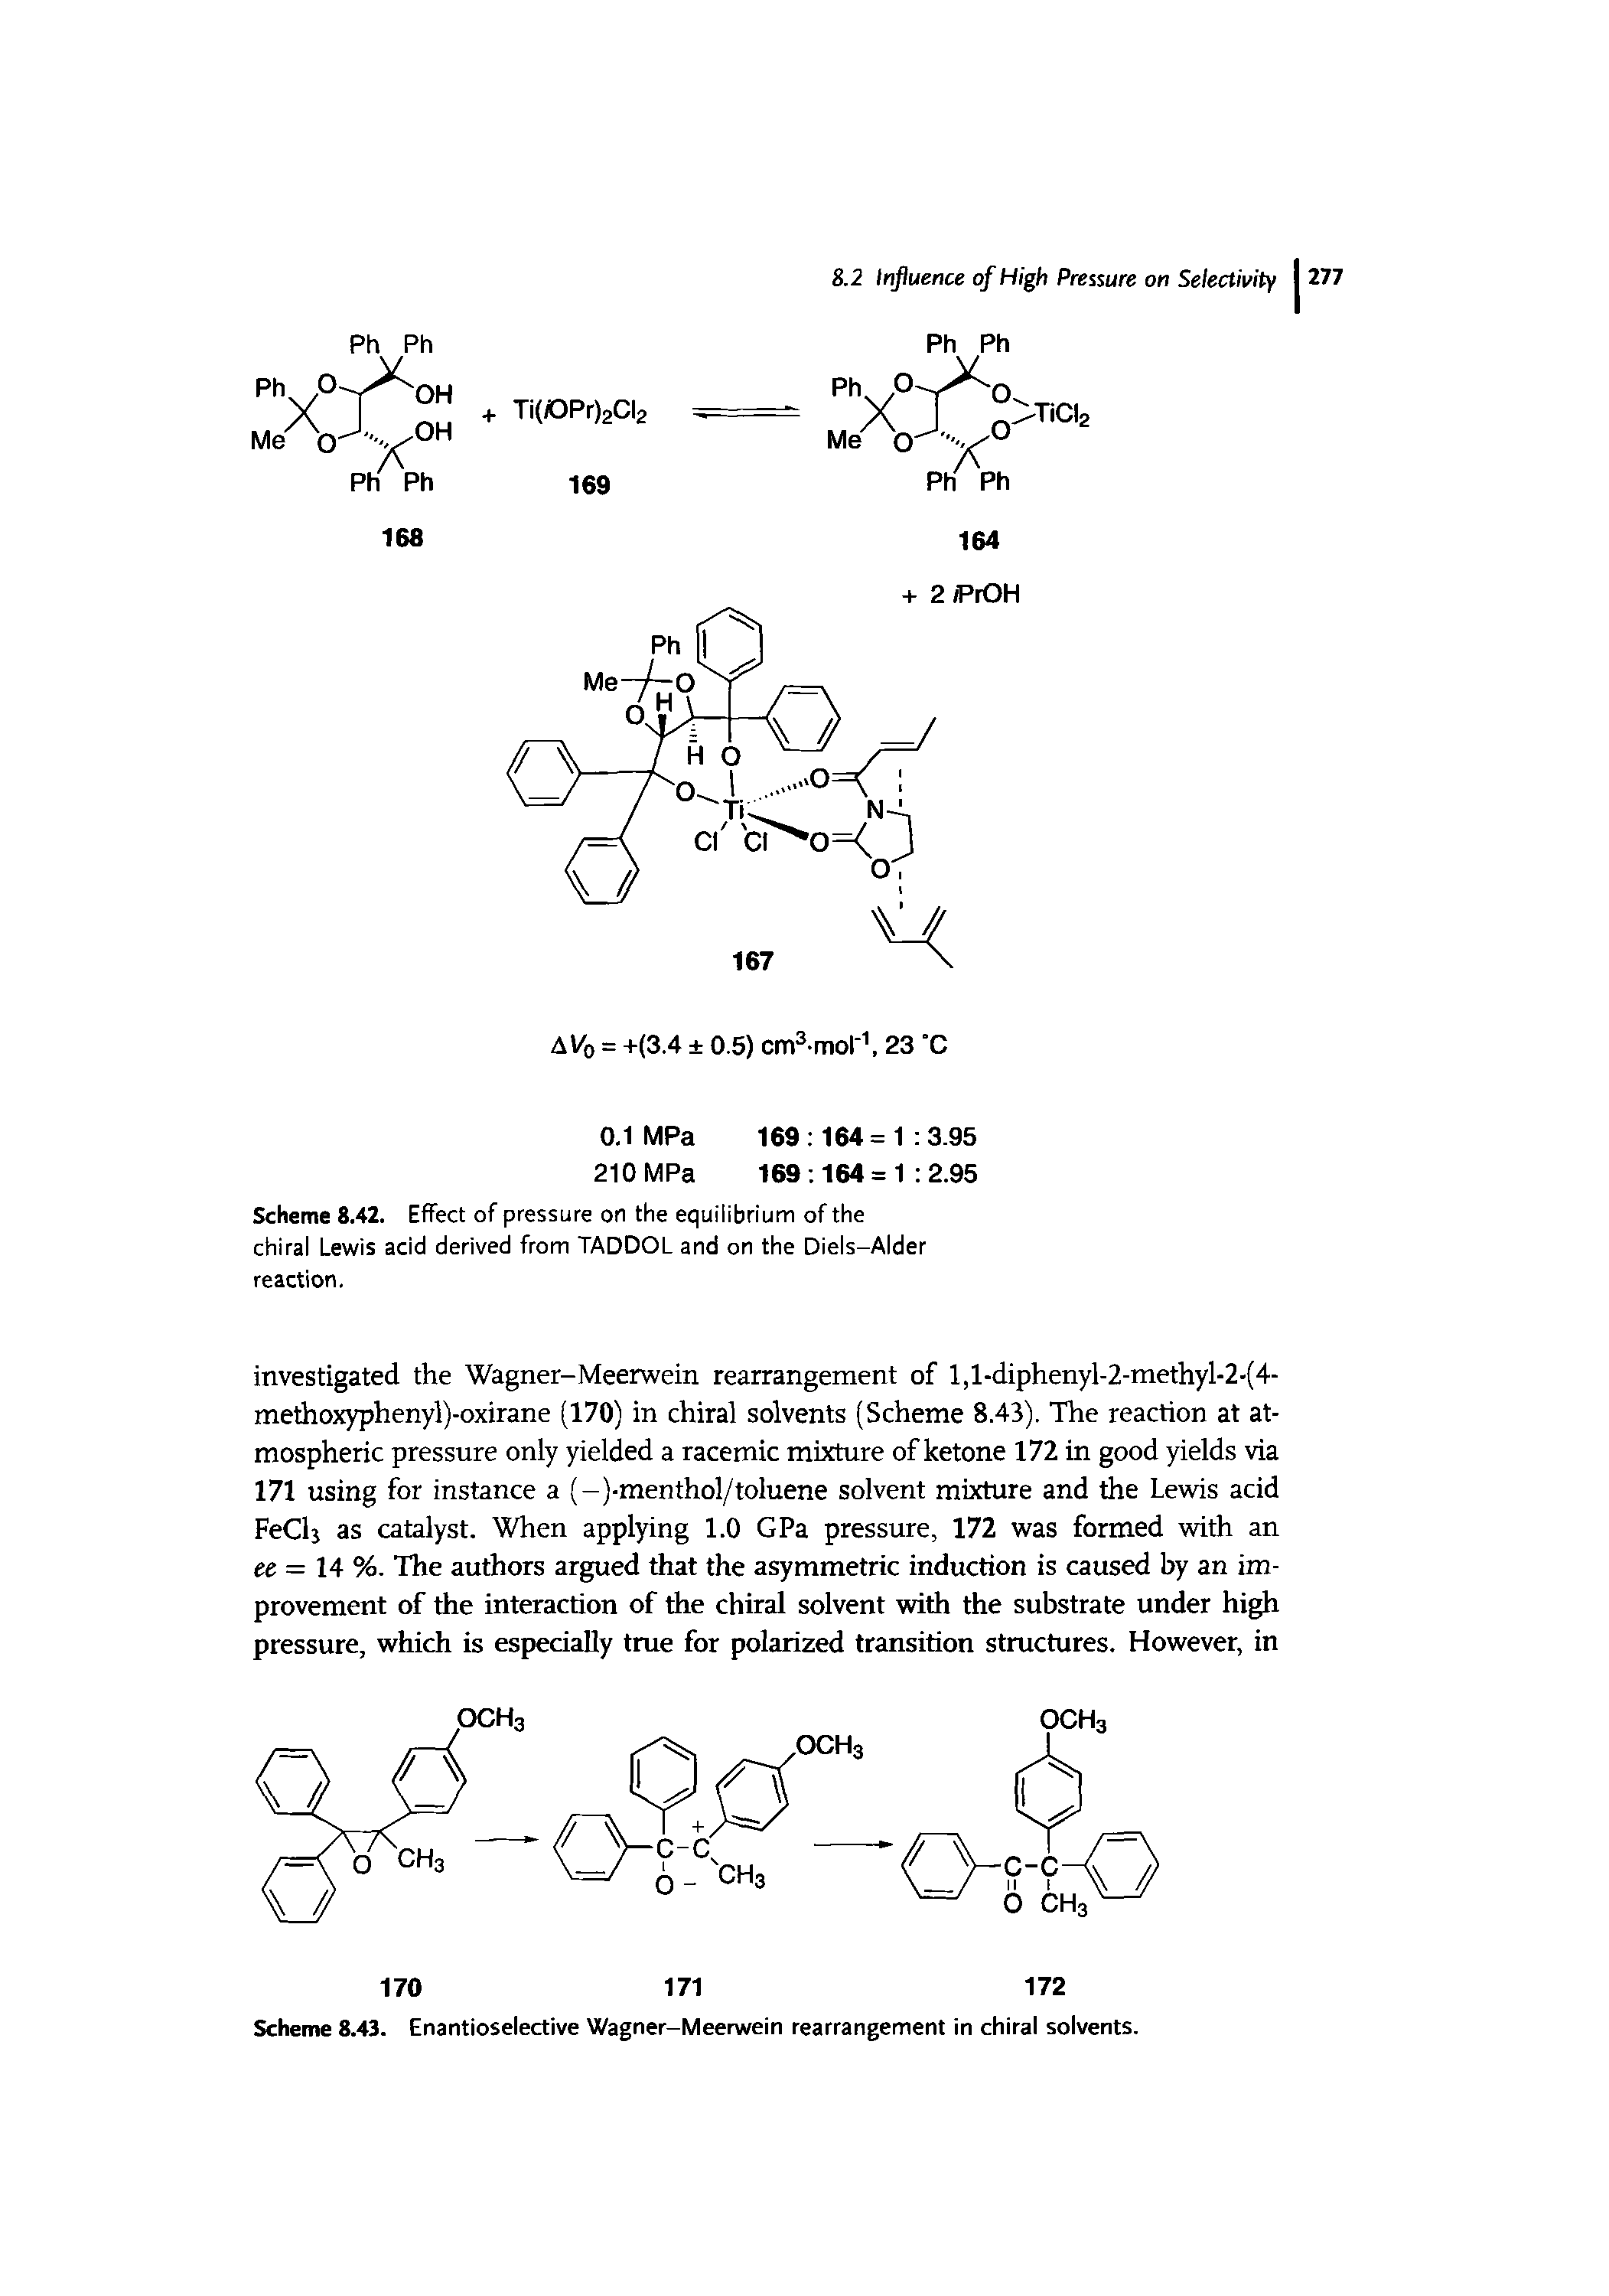 Scheme 8.43. Enantioselective Wagner-Meerwein rearrangement in chiral solvents.